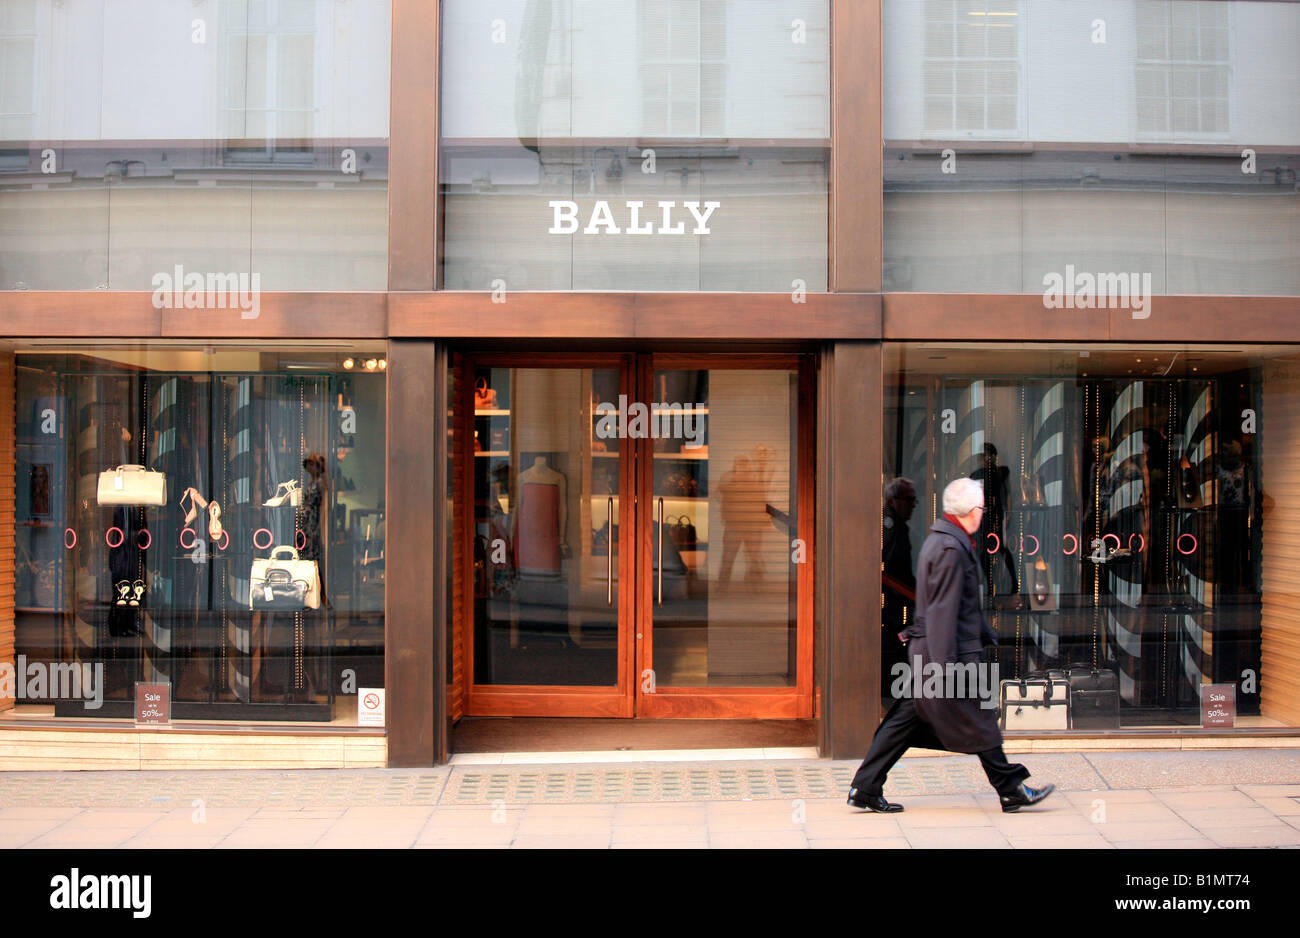 Bally store front, London Stock Photo - Alamy